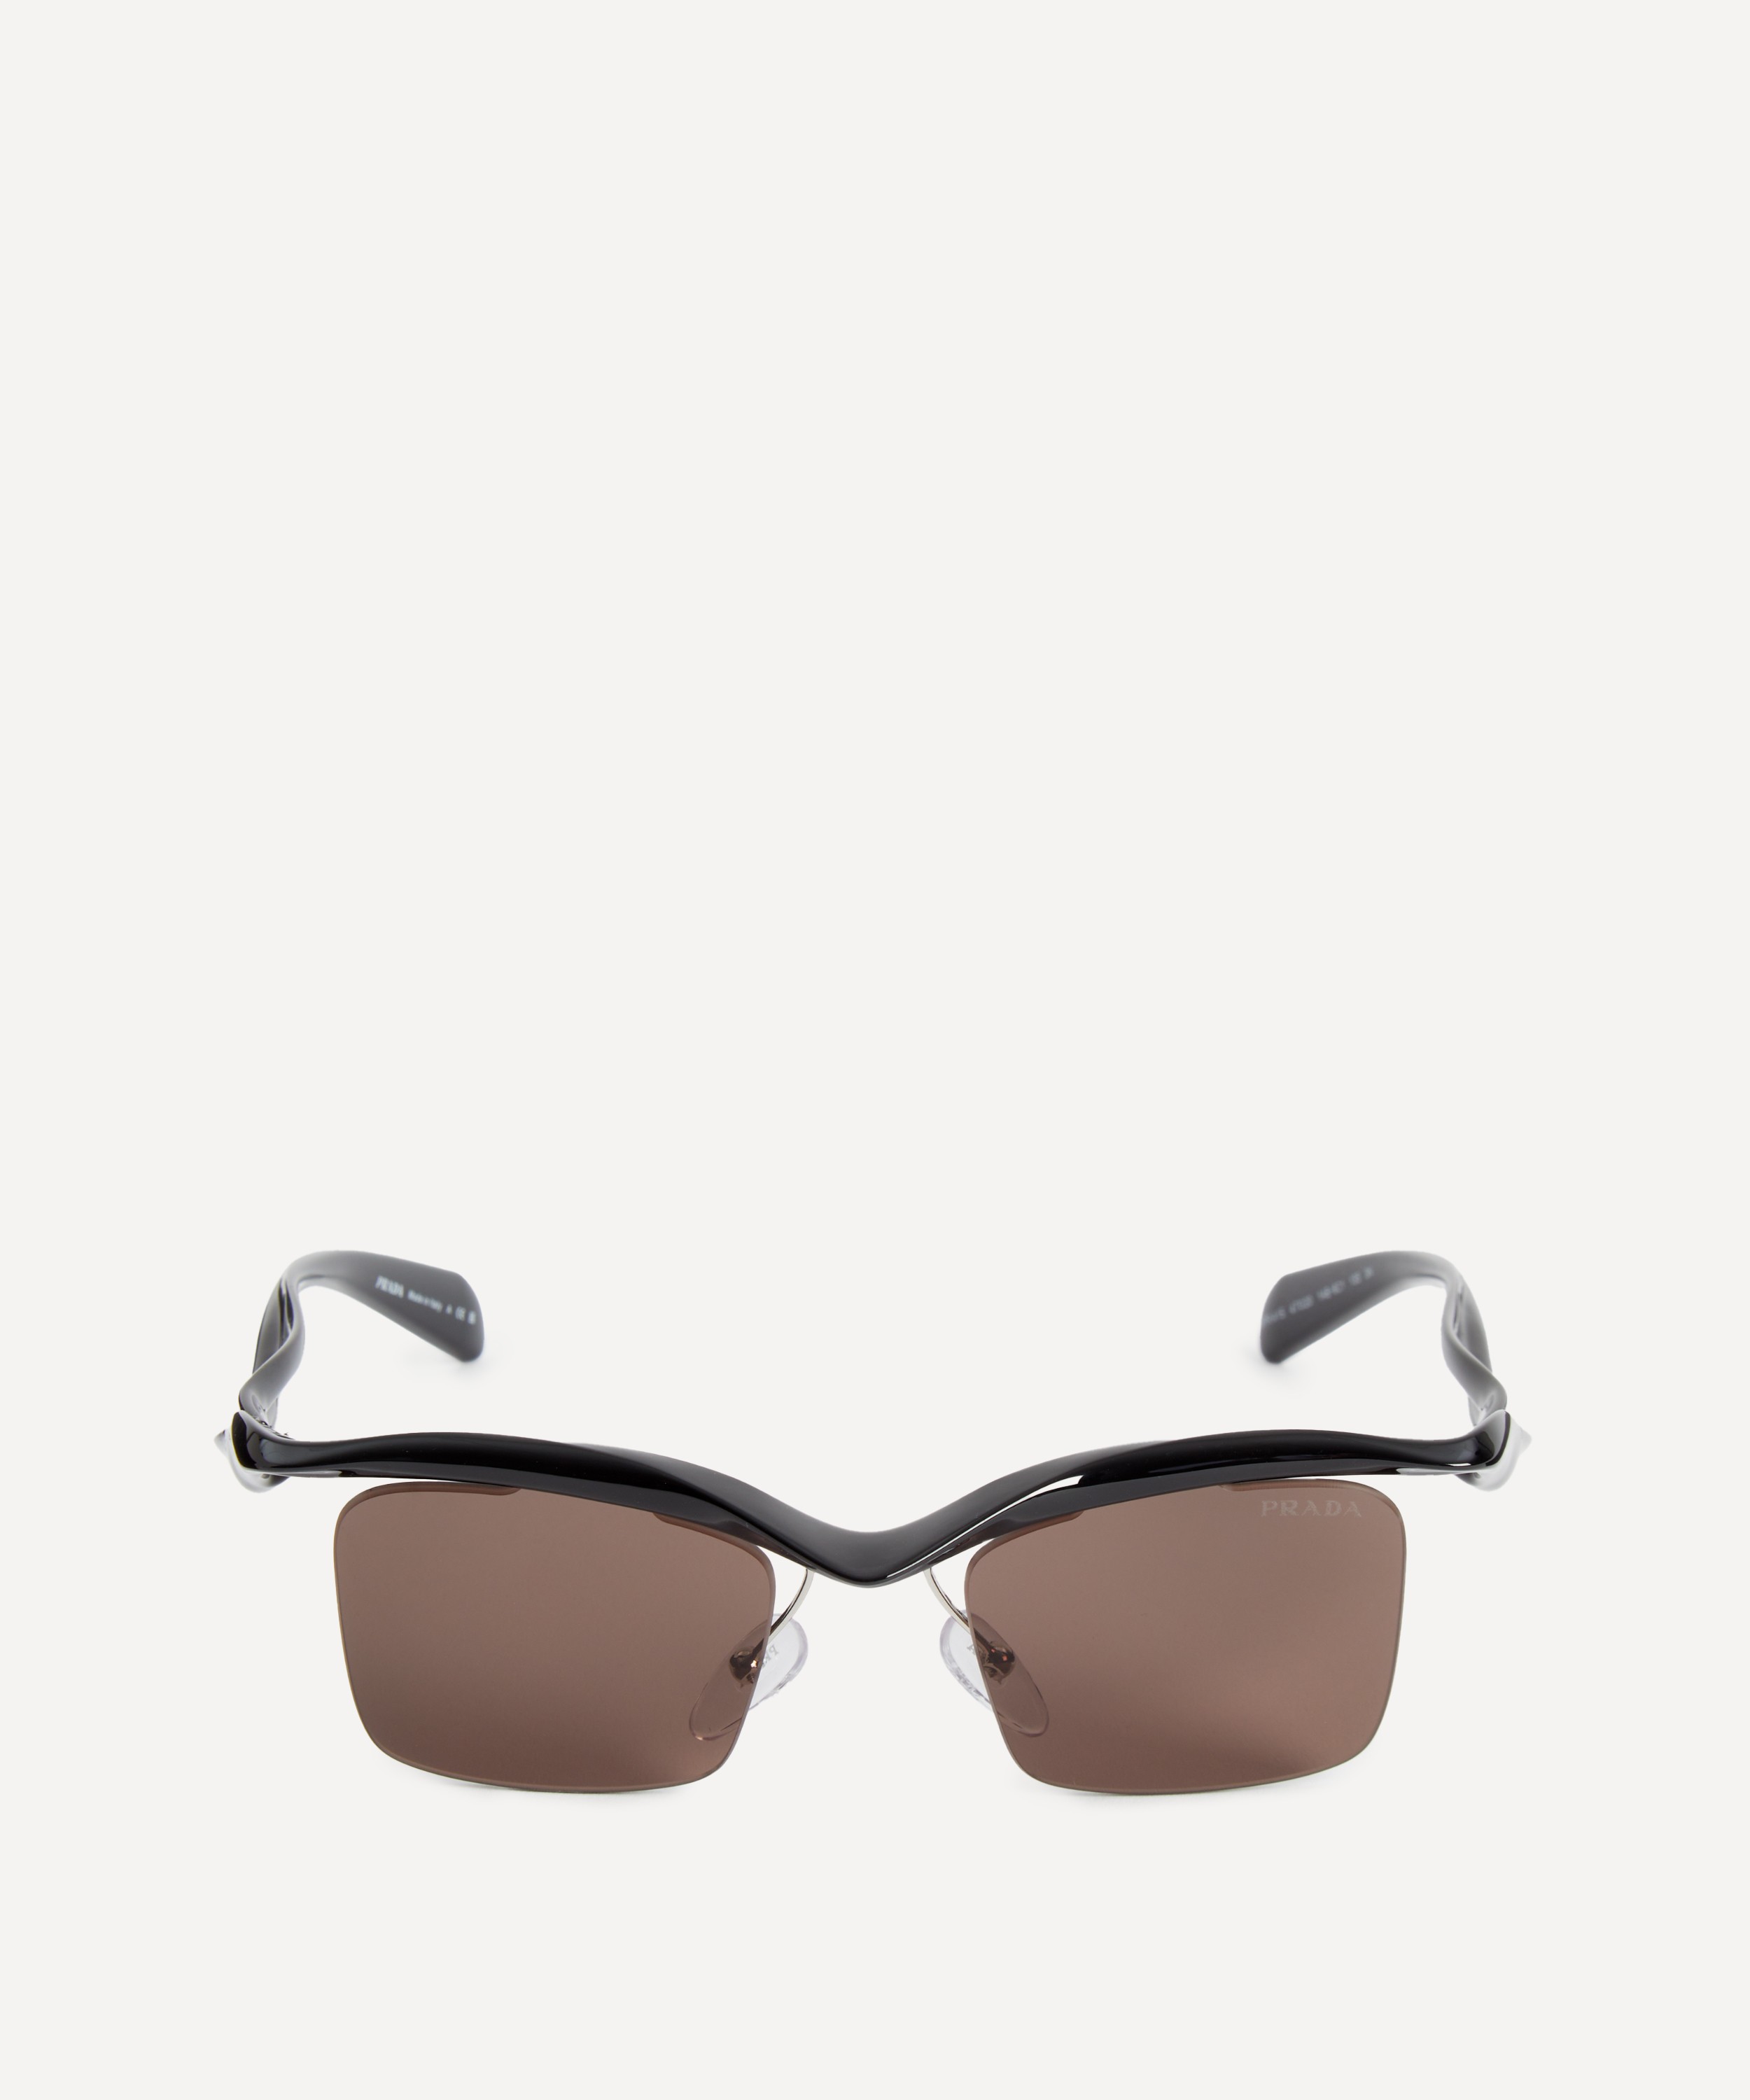 Prada - Square Sunglasses